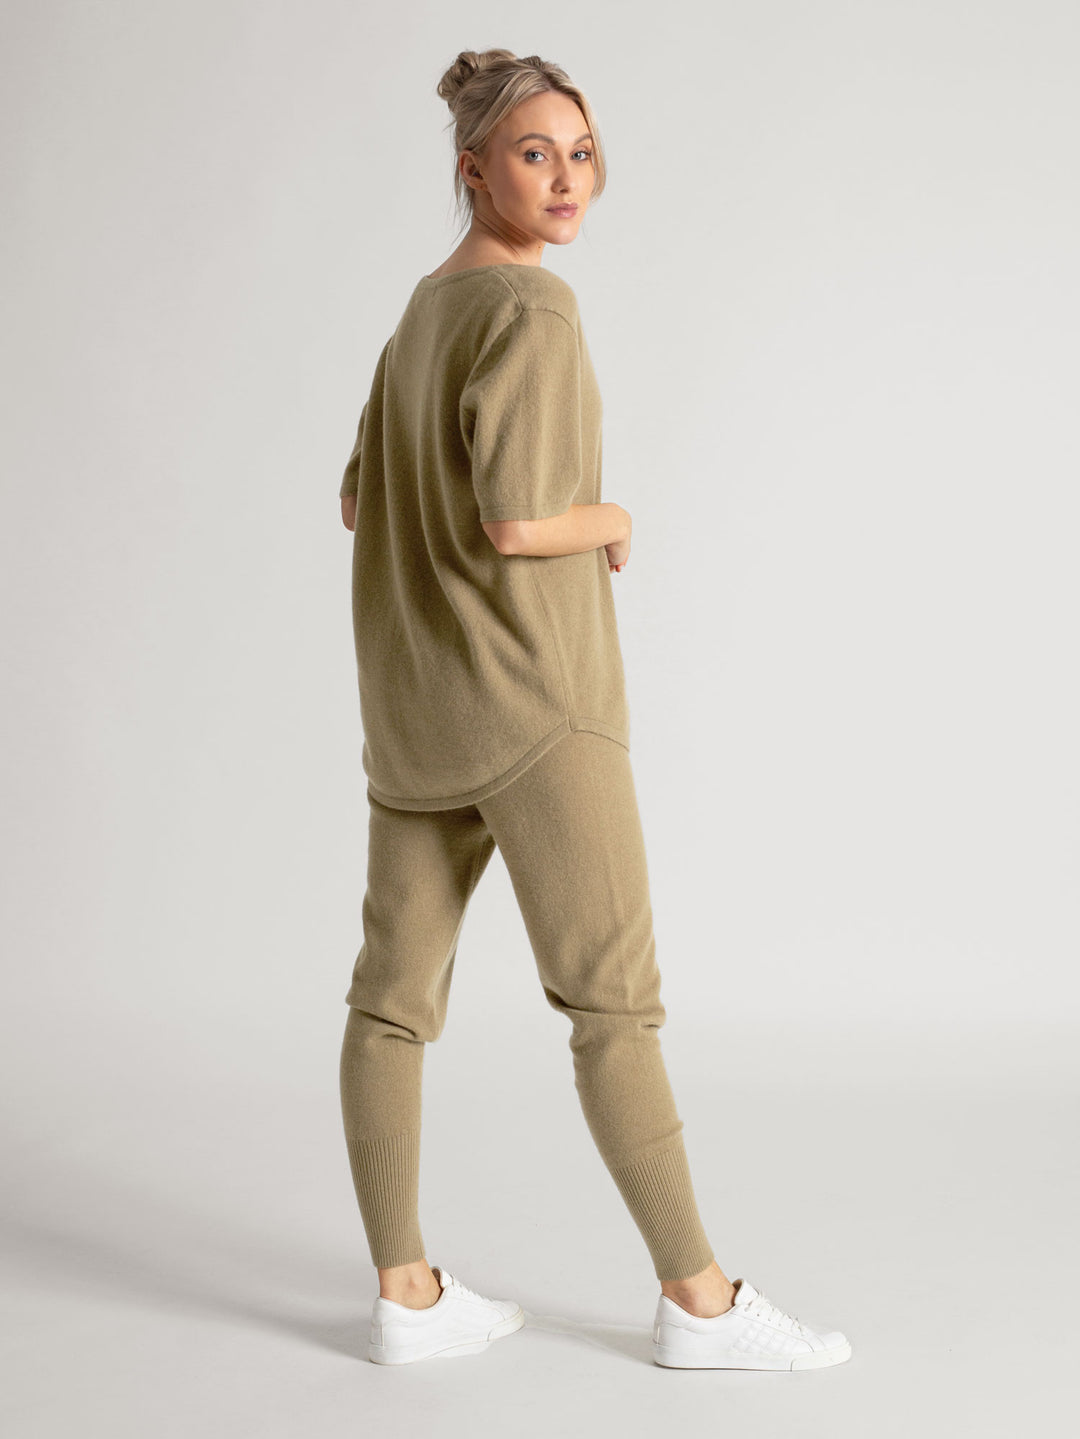 cashmere pants in 100% pure cashmere. Color: Olive. Scandinavian design by Kashmina